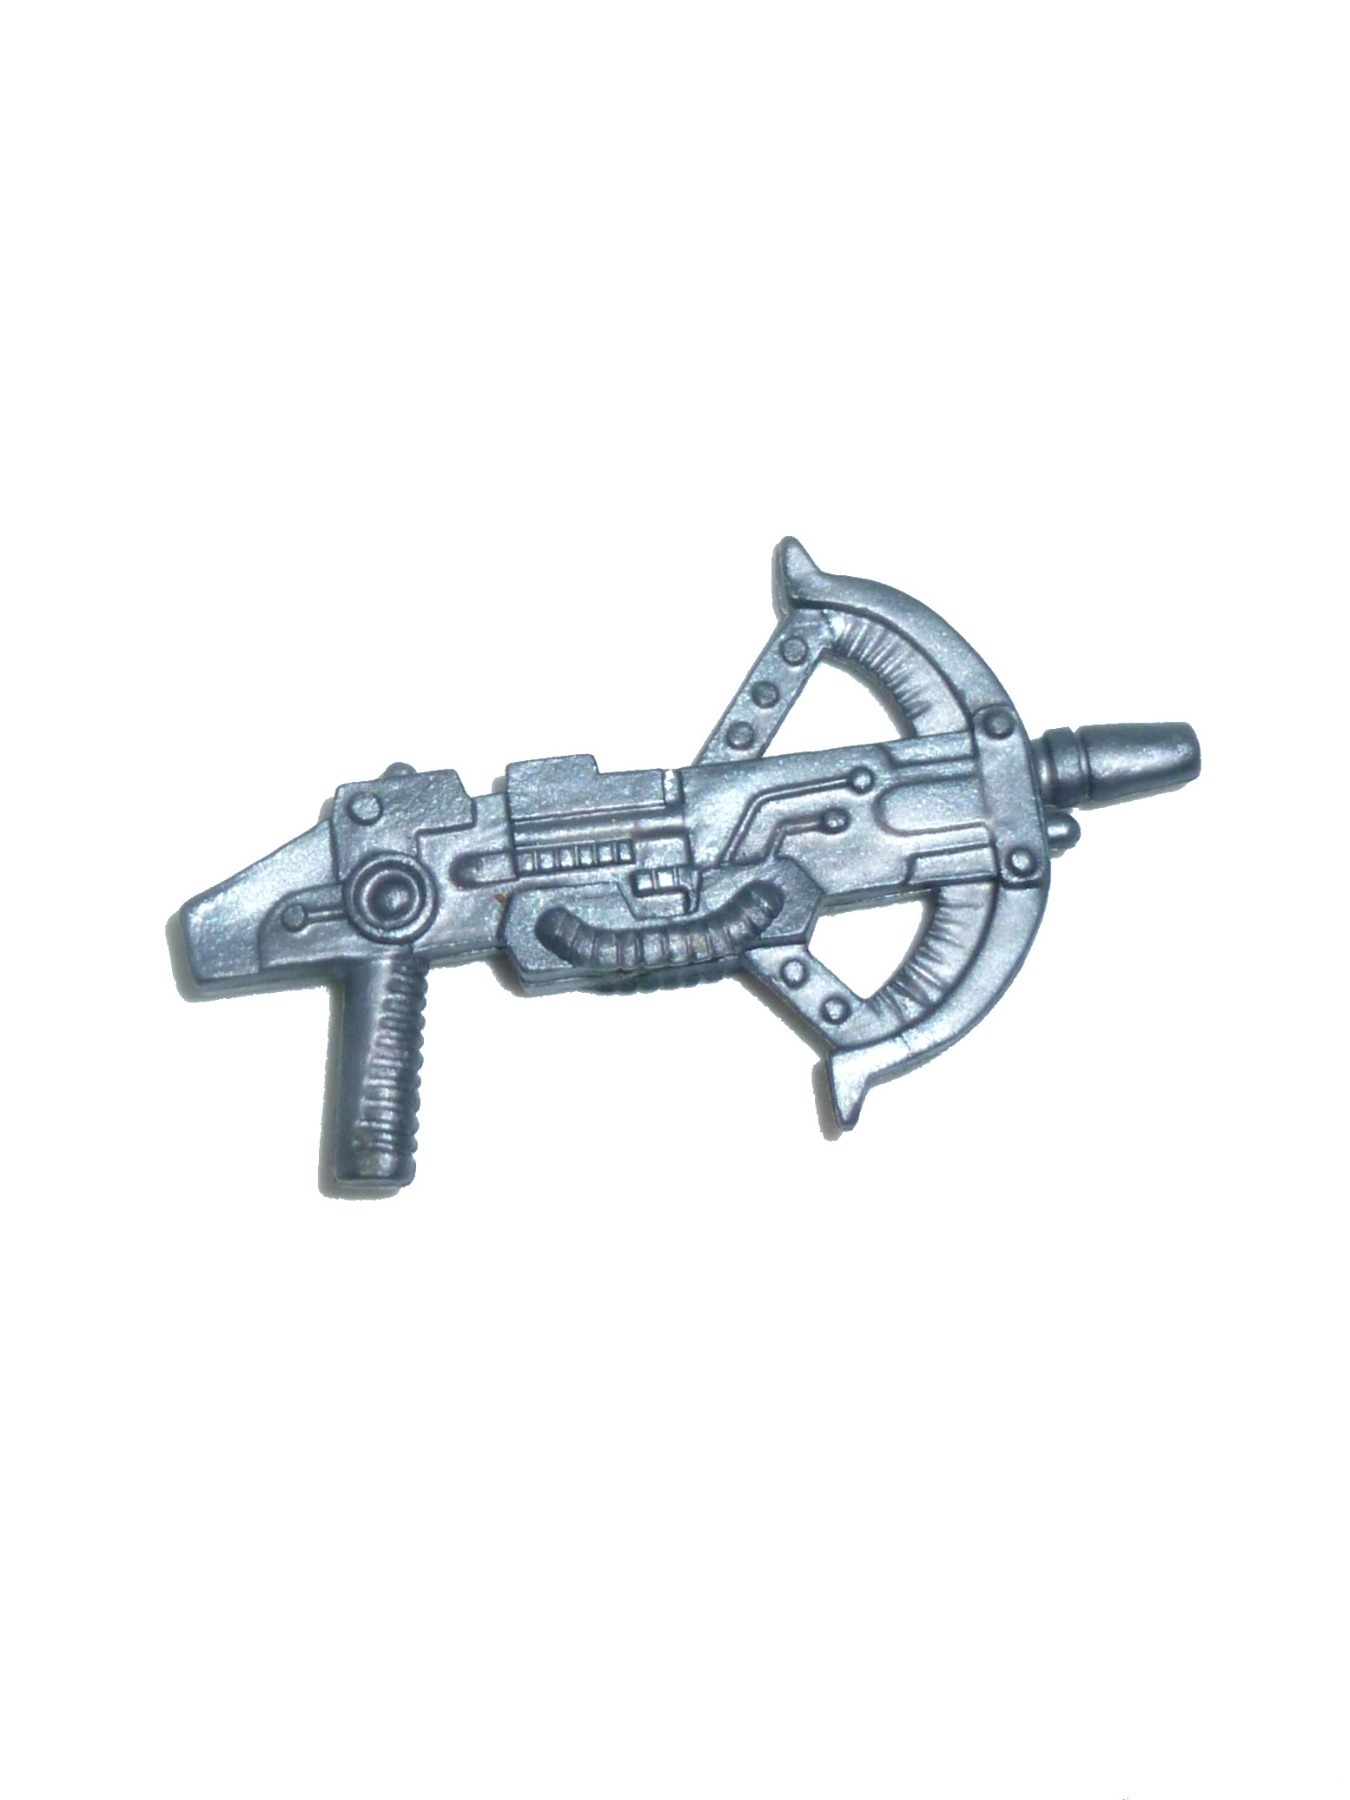 Castle Grayskull - Weapon / blaster accessory